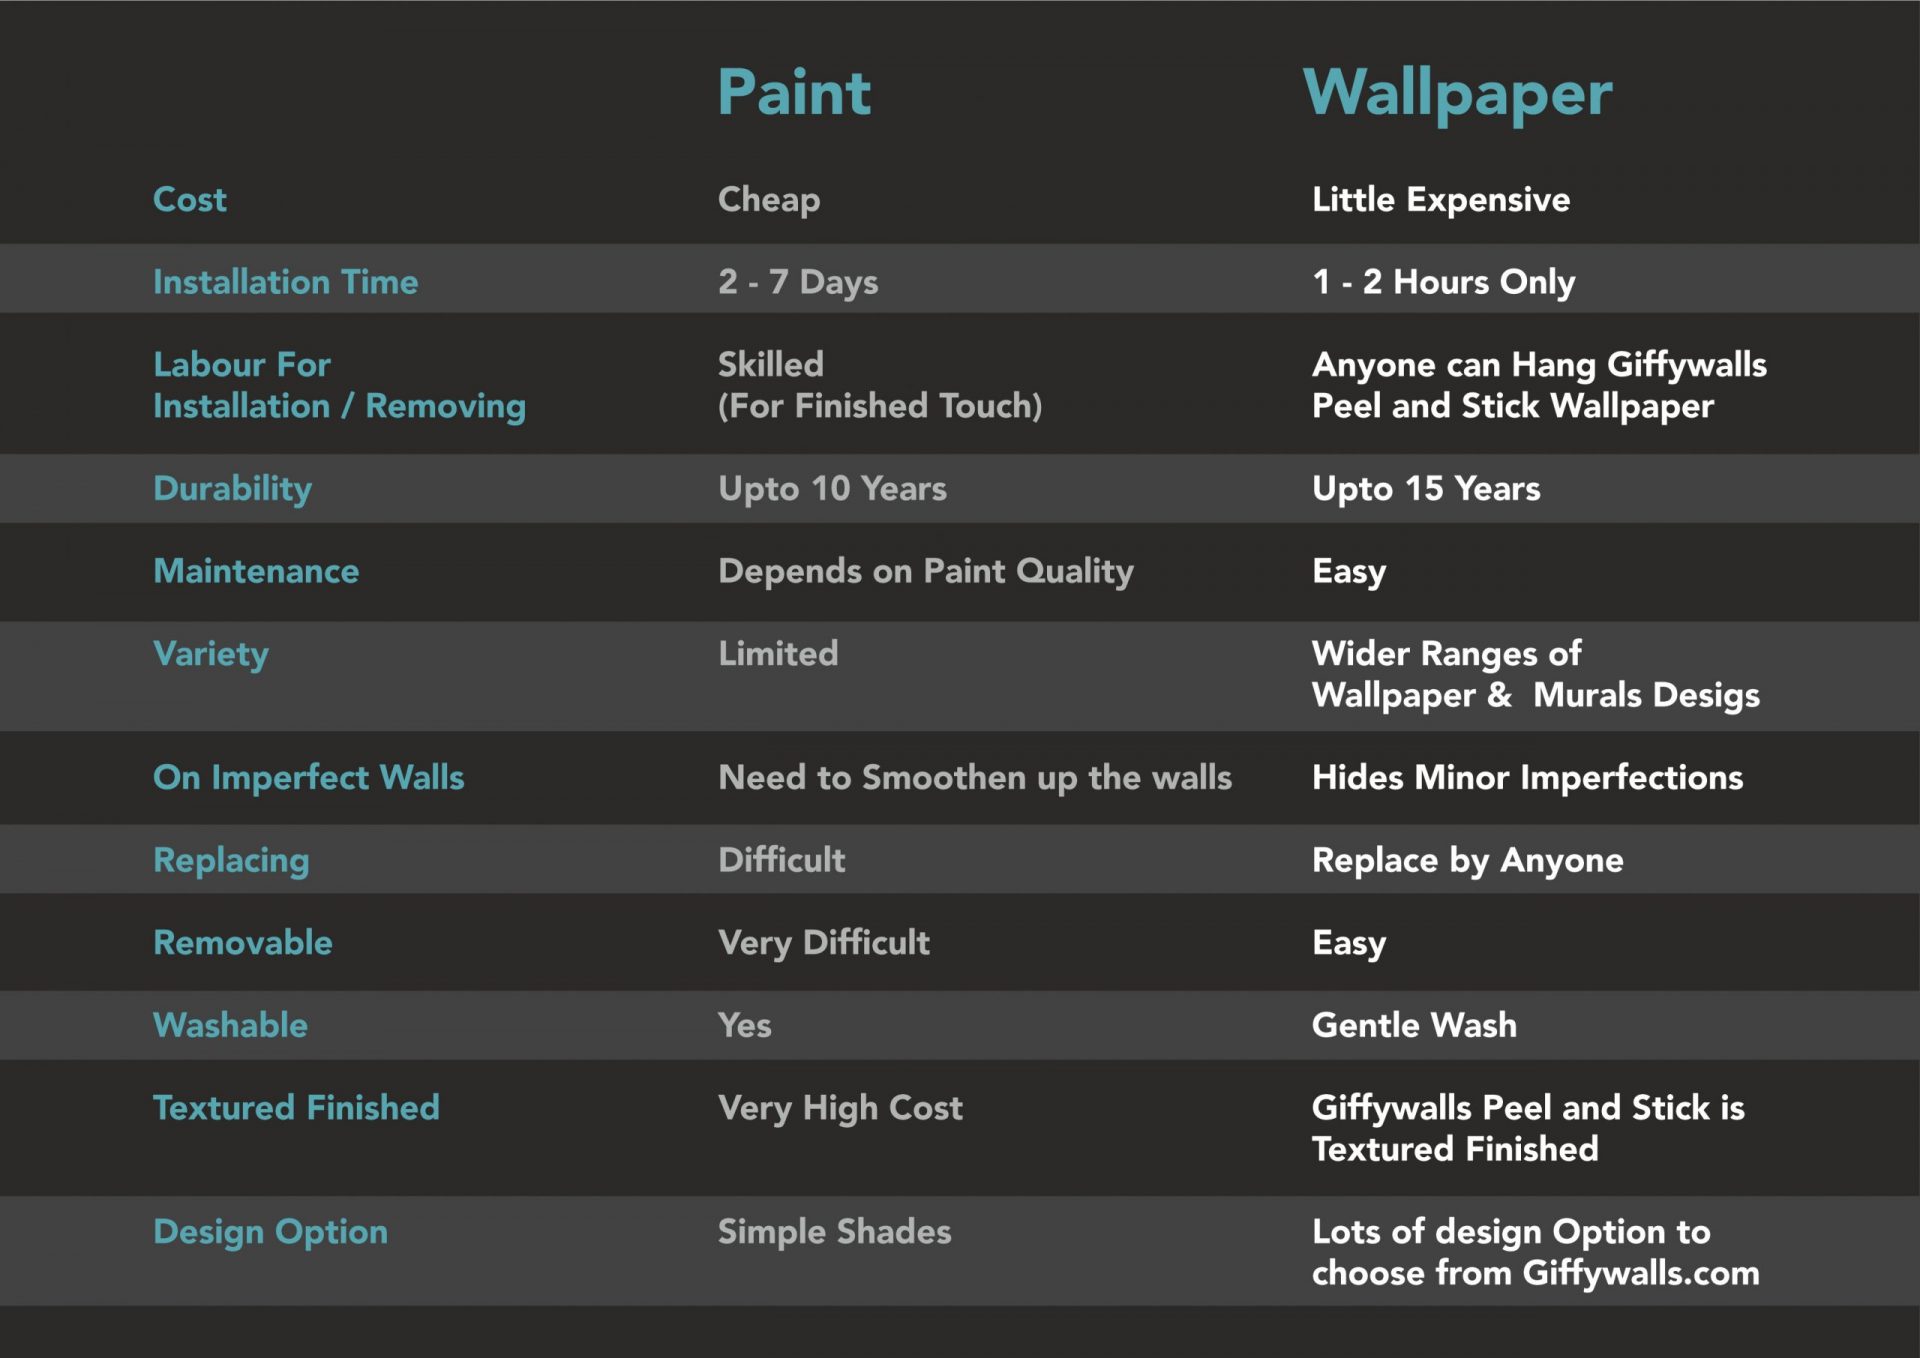 Paint wall vs Wallpaper wall